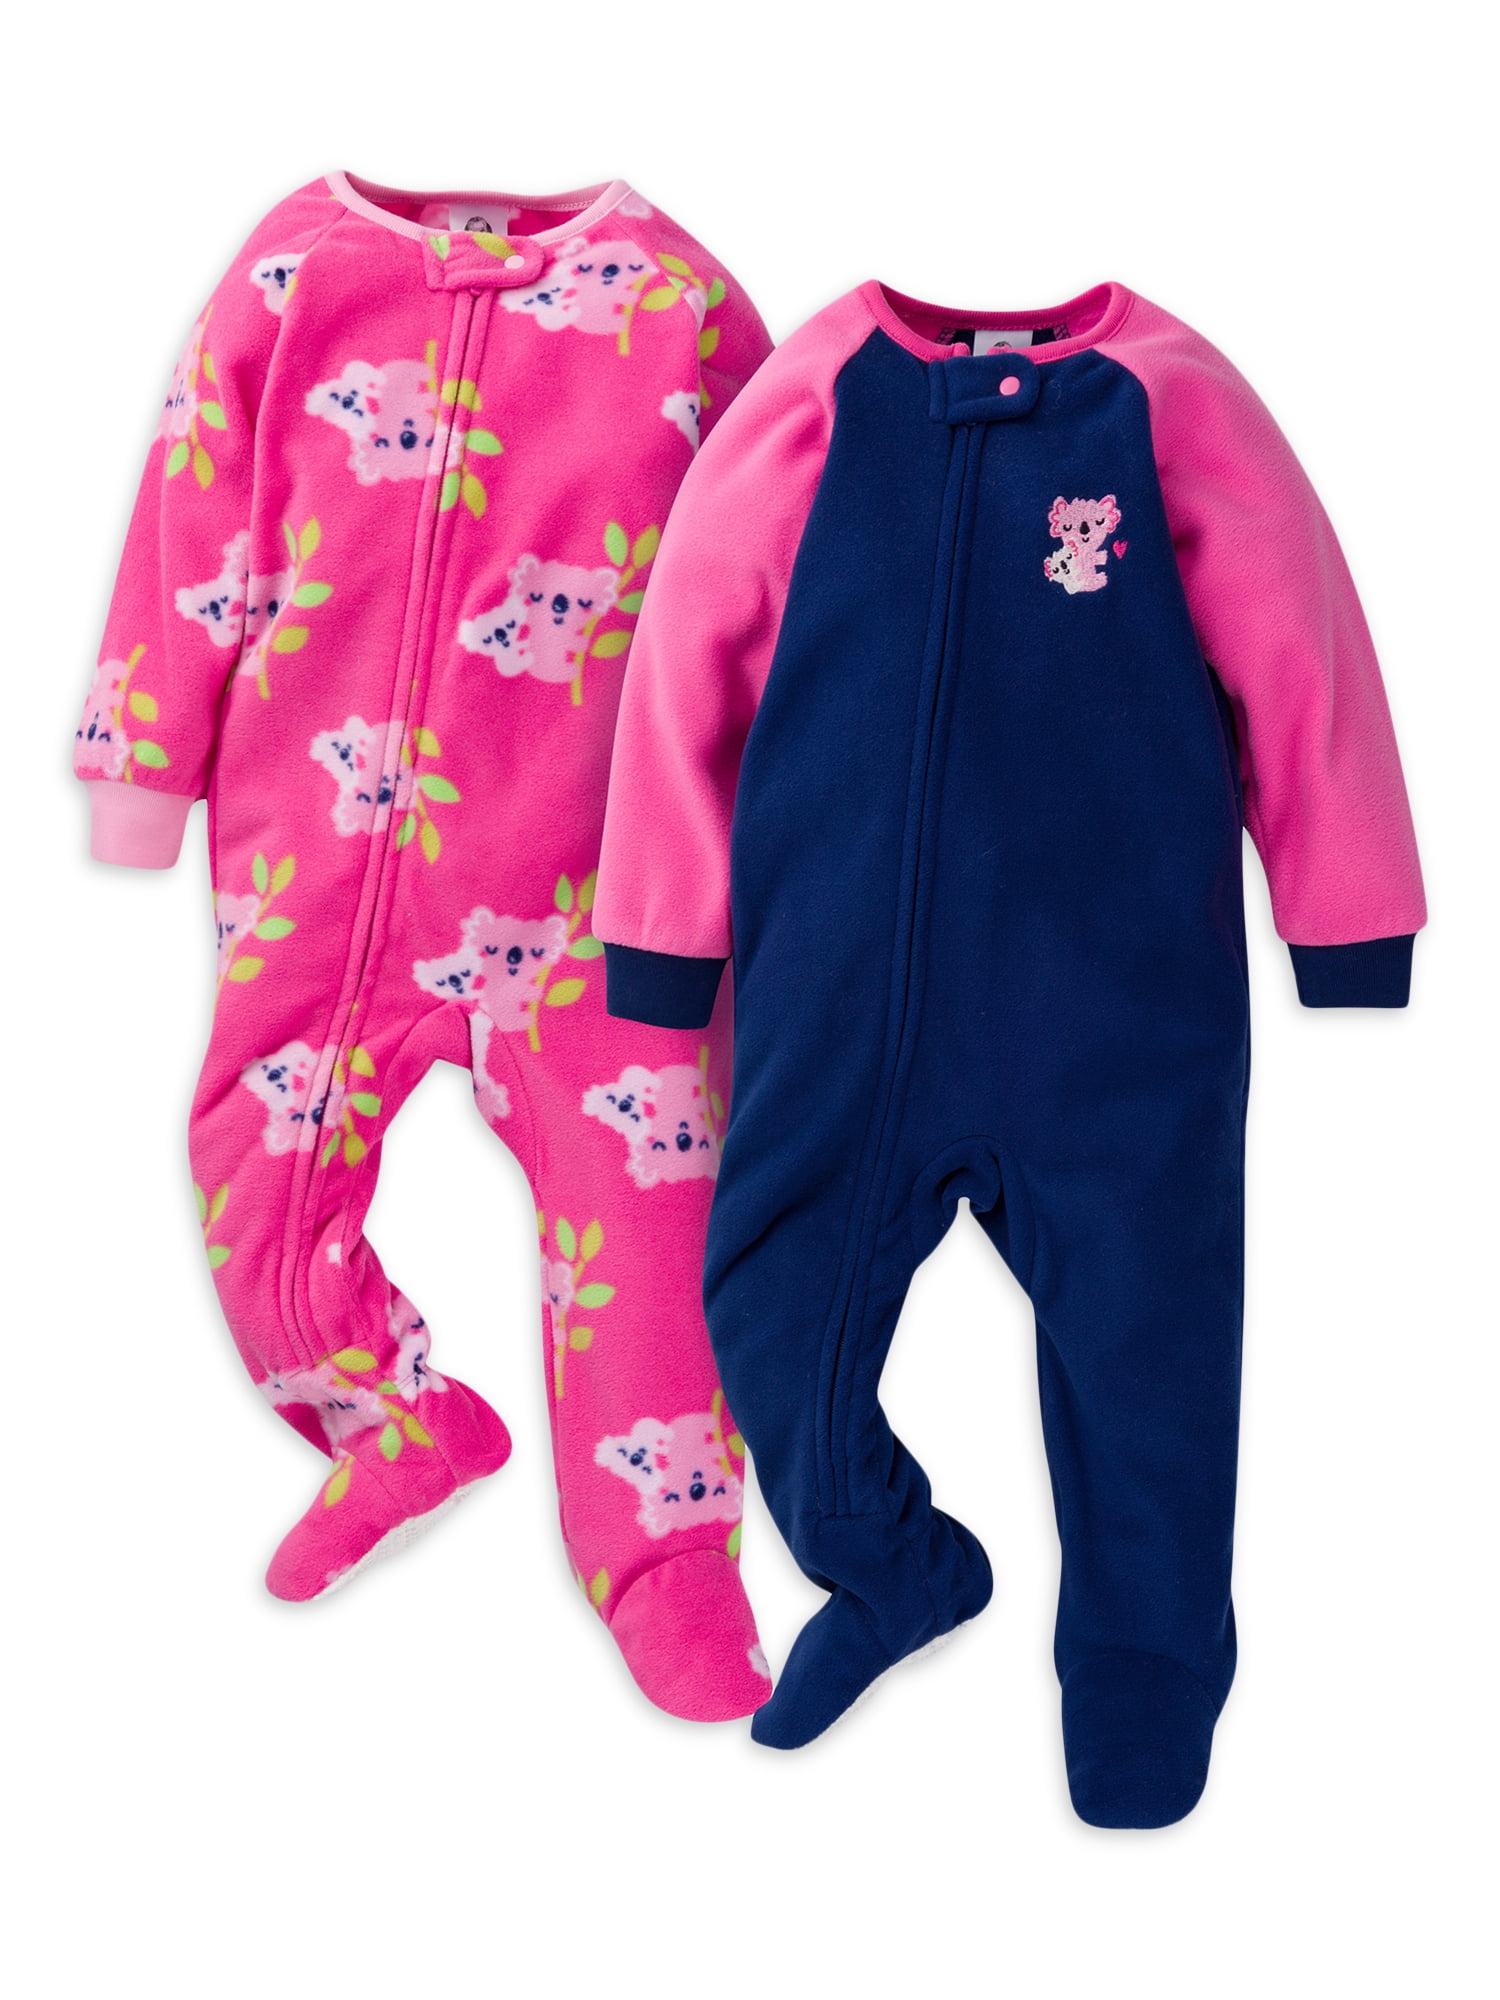 Mothercare Mothercare Baby Boys Girls Sleepy bear Unisex Pyjamas 2 pairs set 3 to 6 M BNWT 